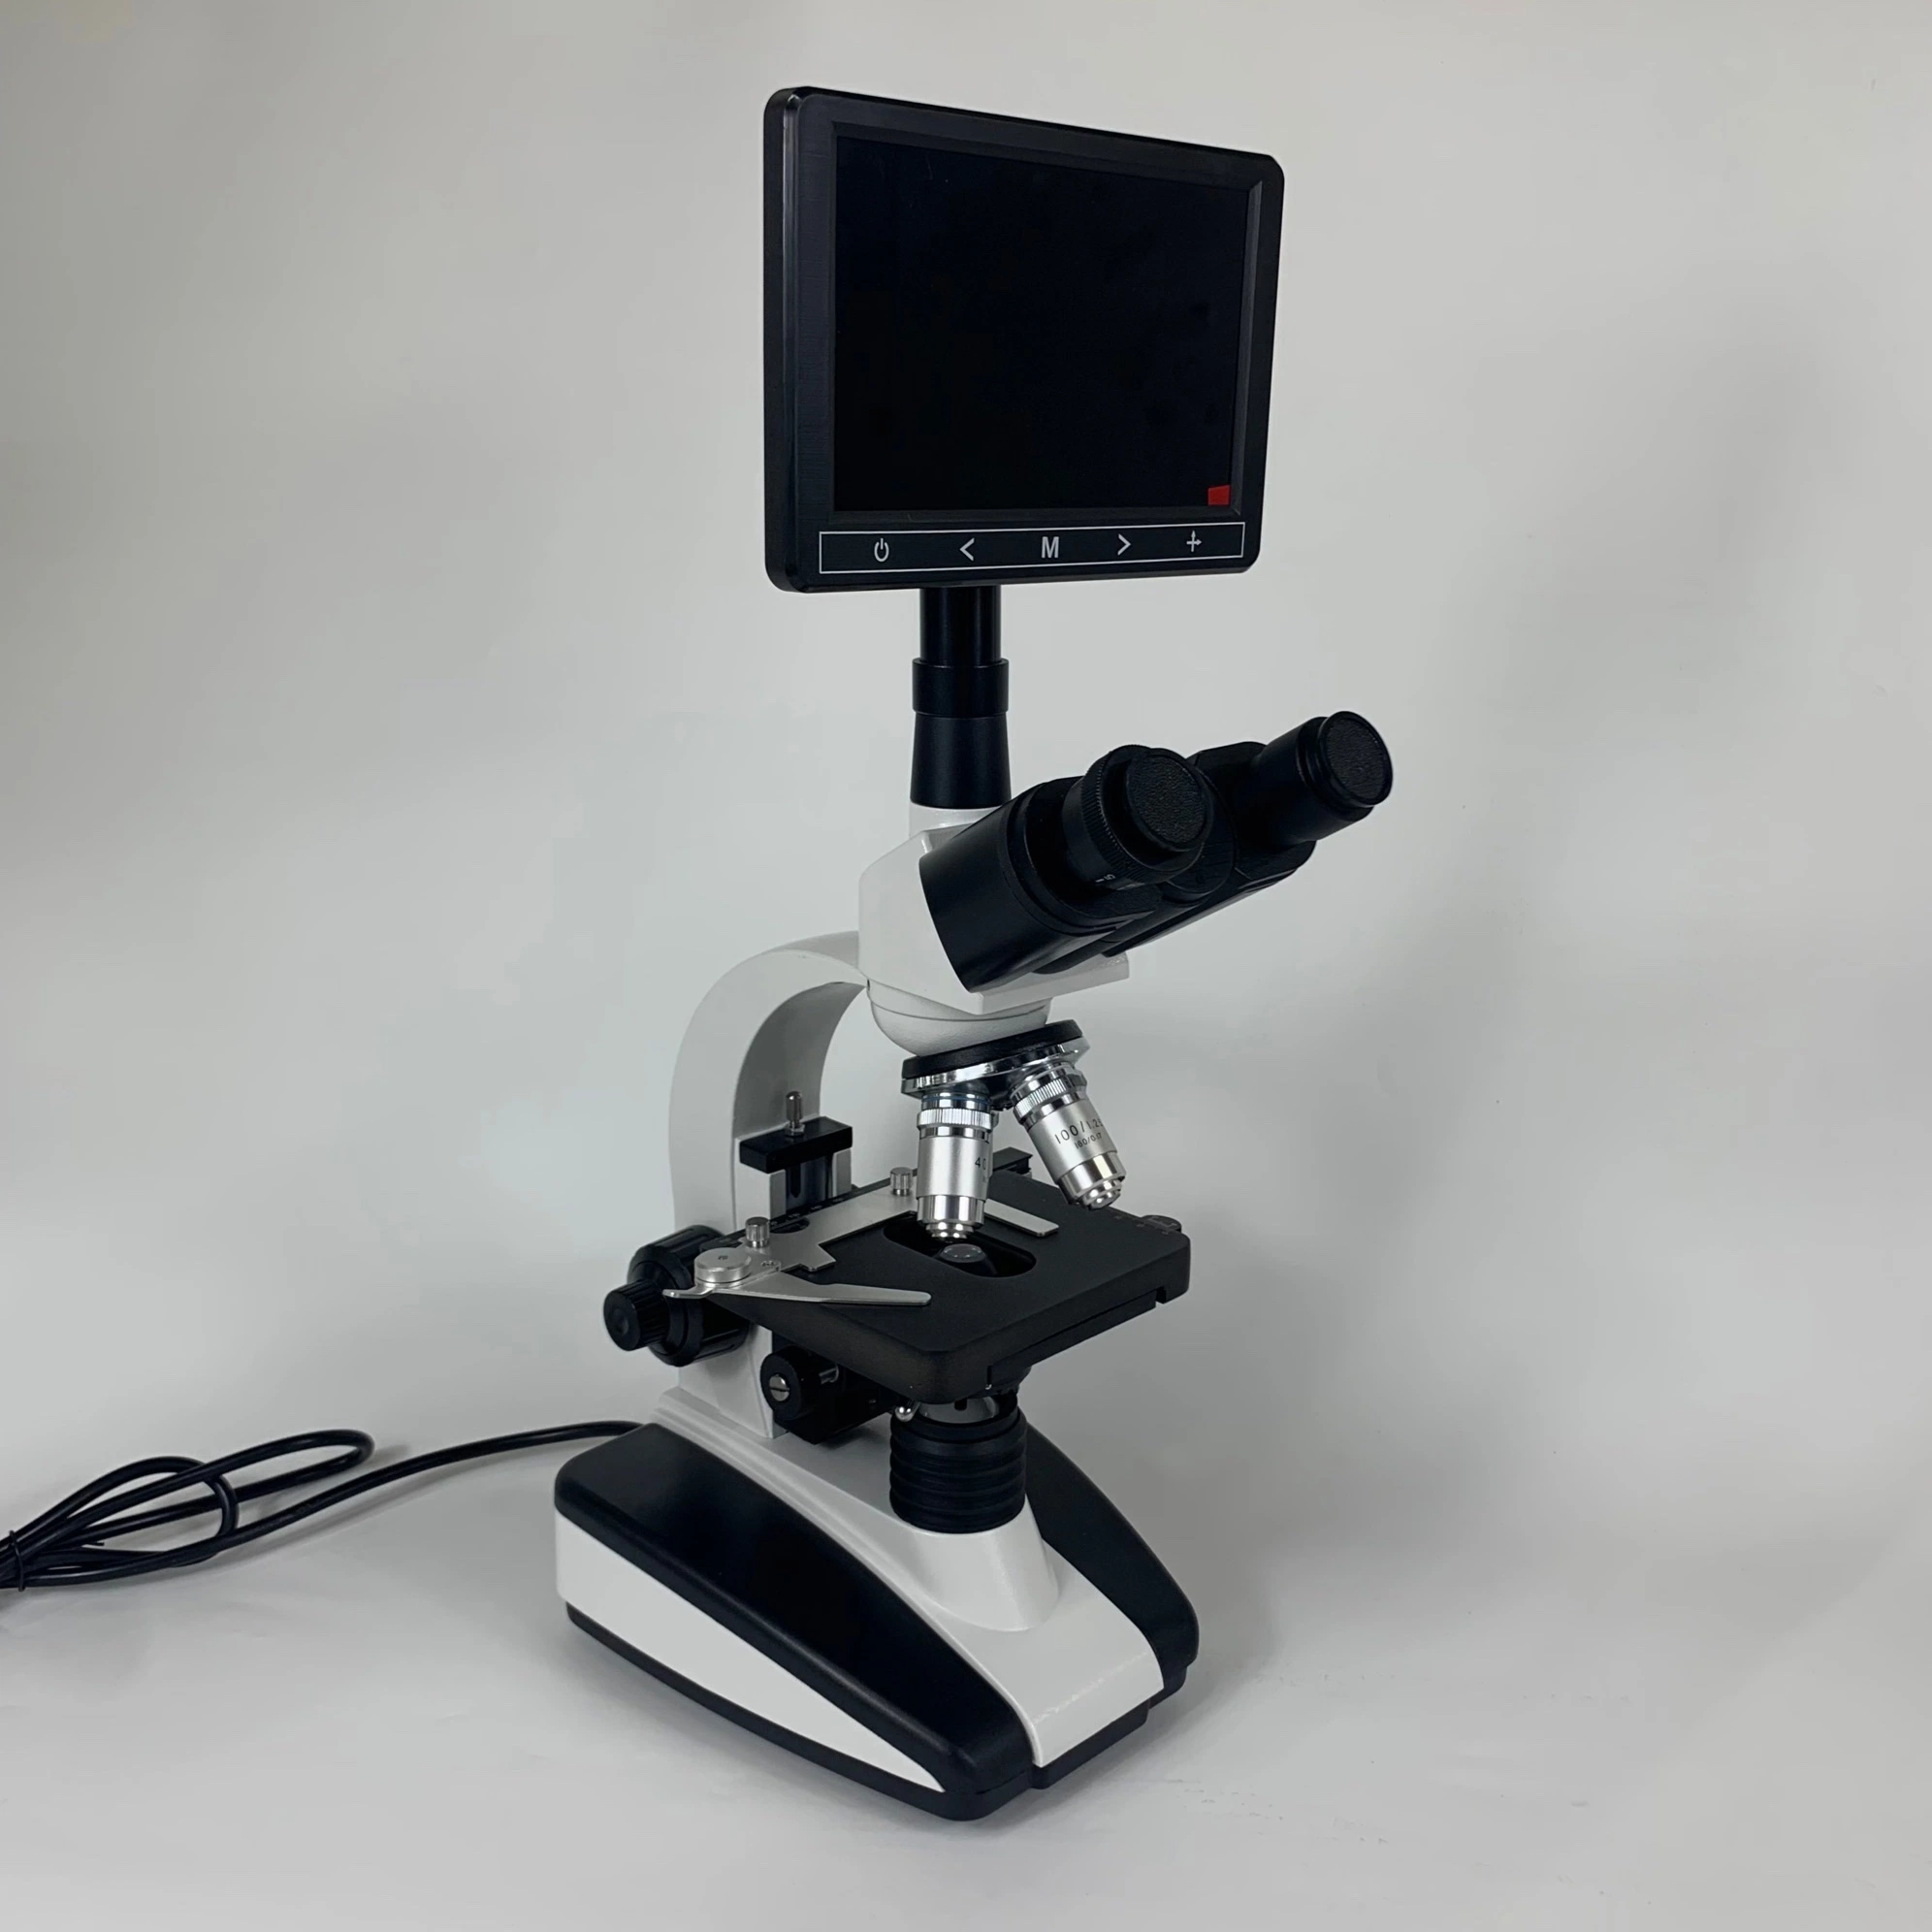 Trinocular Head Microscope with Screen Xsp-136sm Manufacturer in Ningbo, China